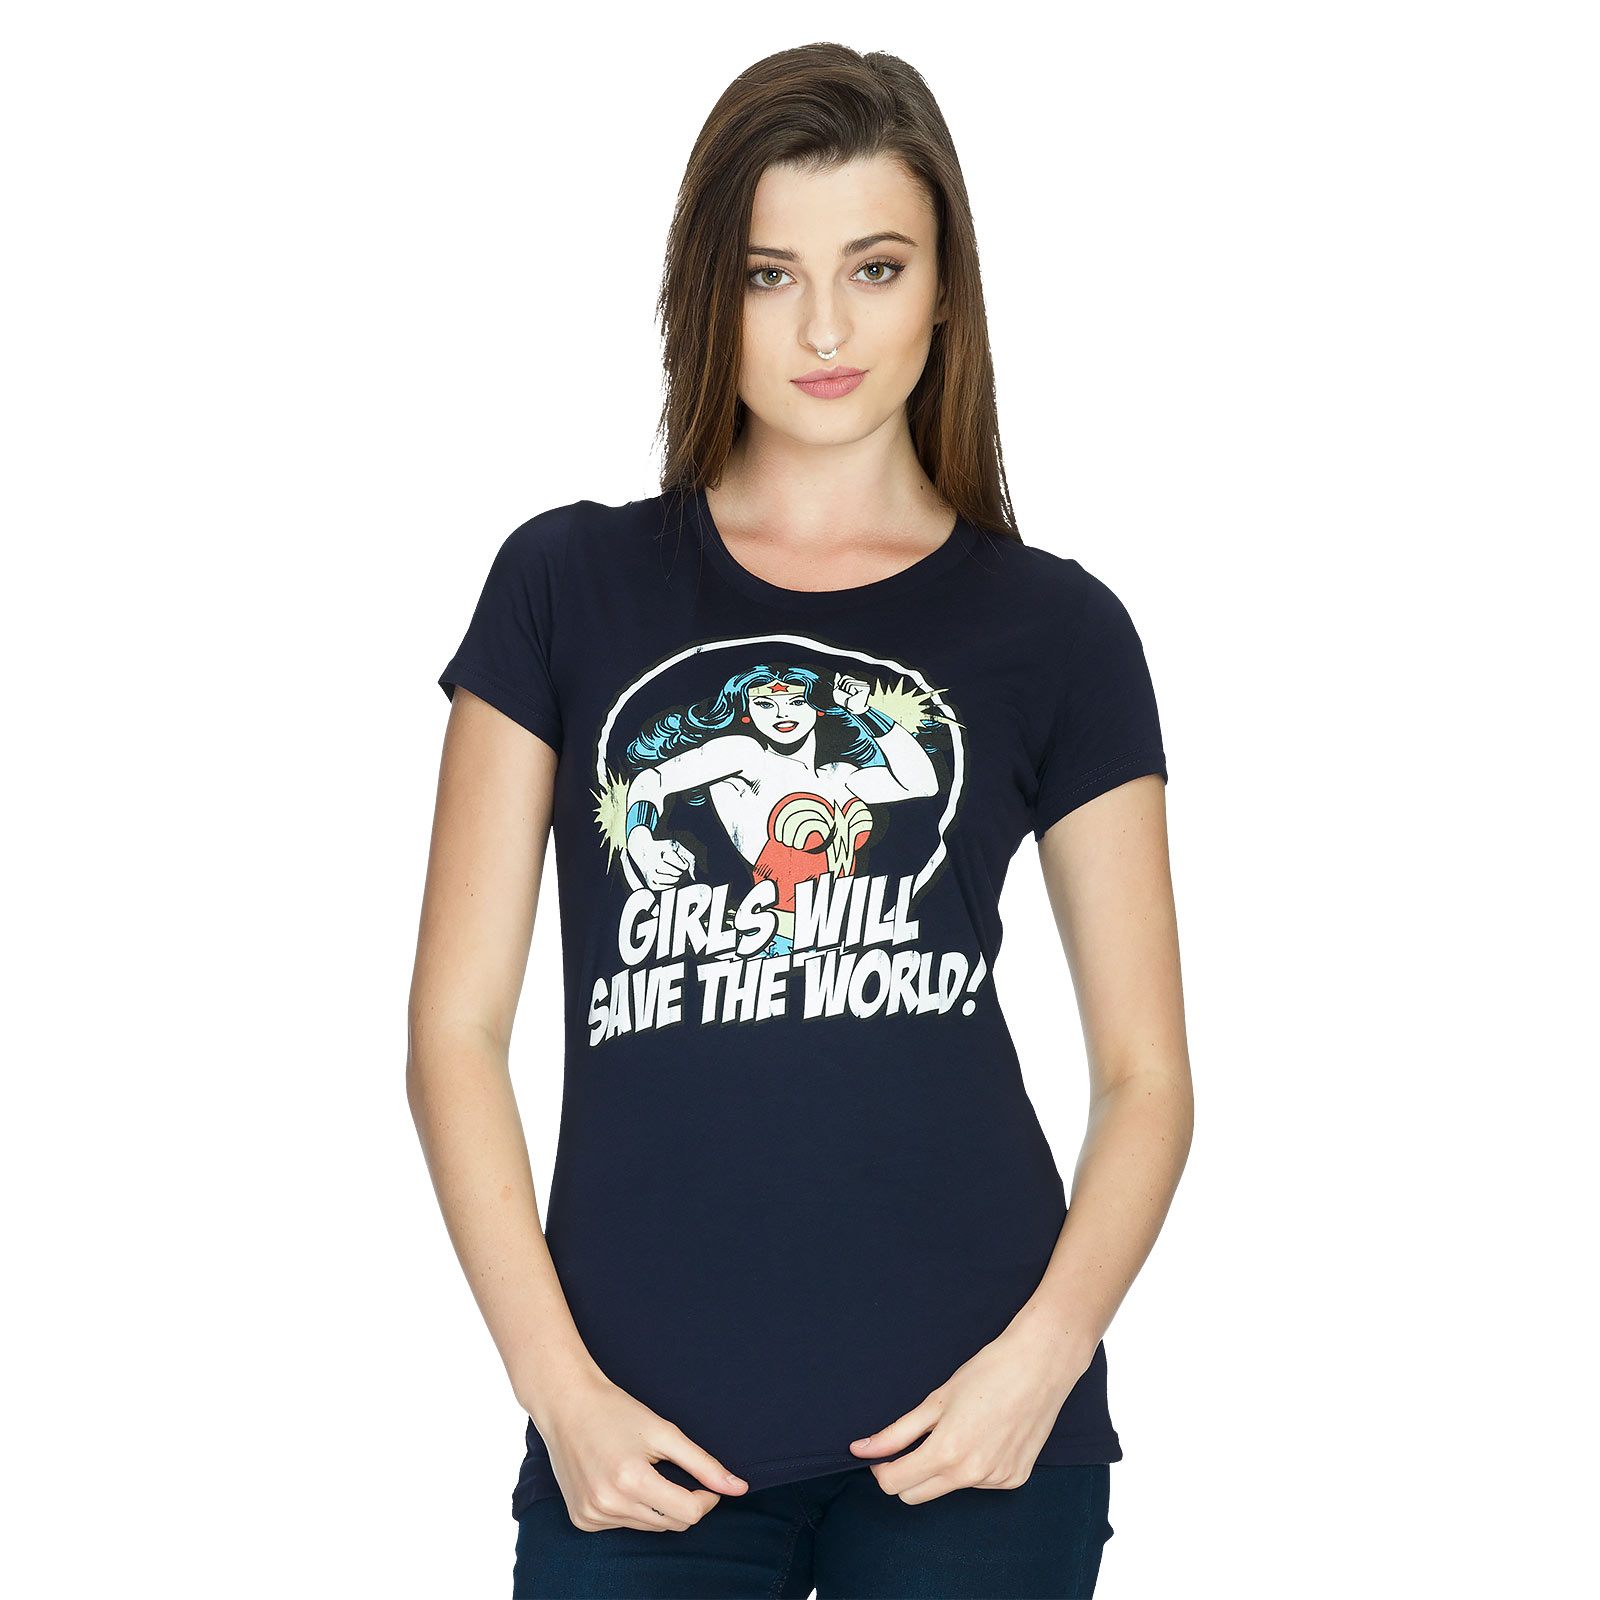 Wonder Woman - Girls Will Save The World Girlie Shirt blau